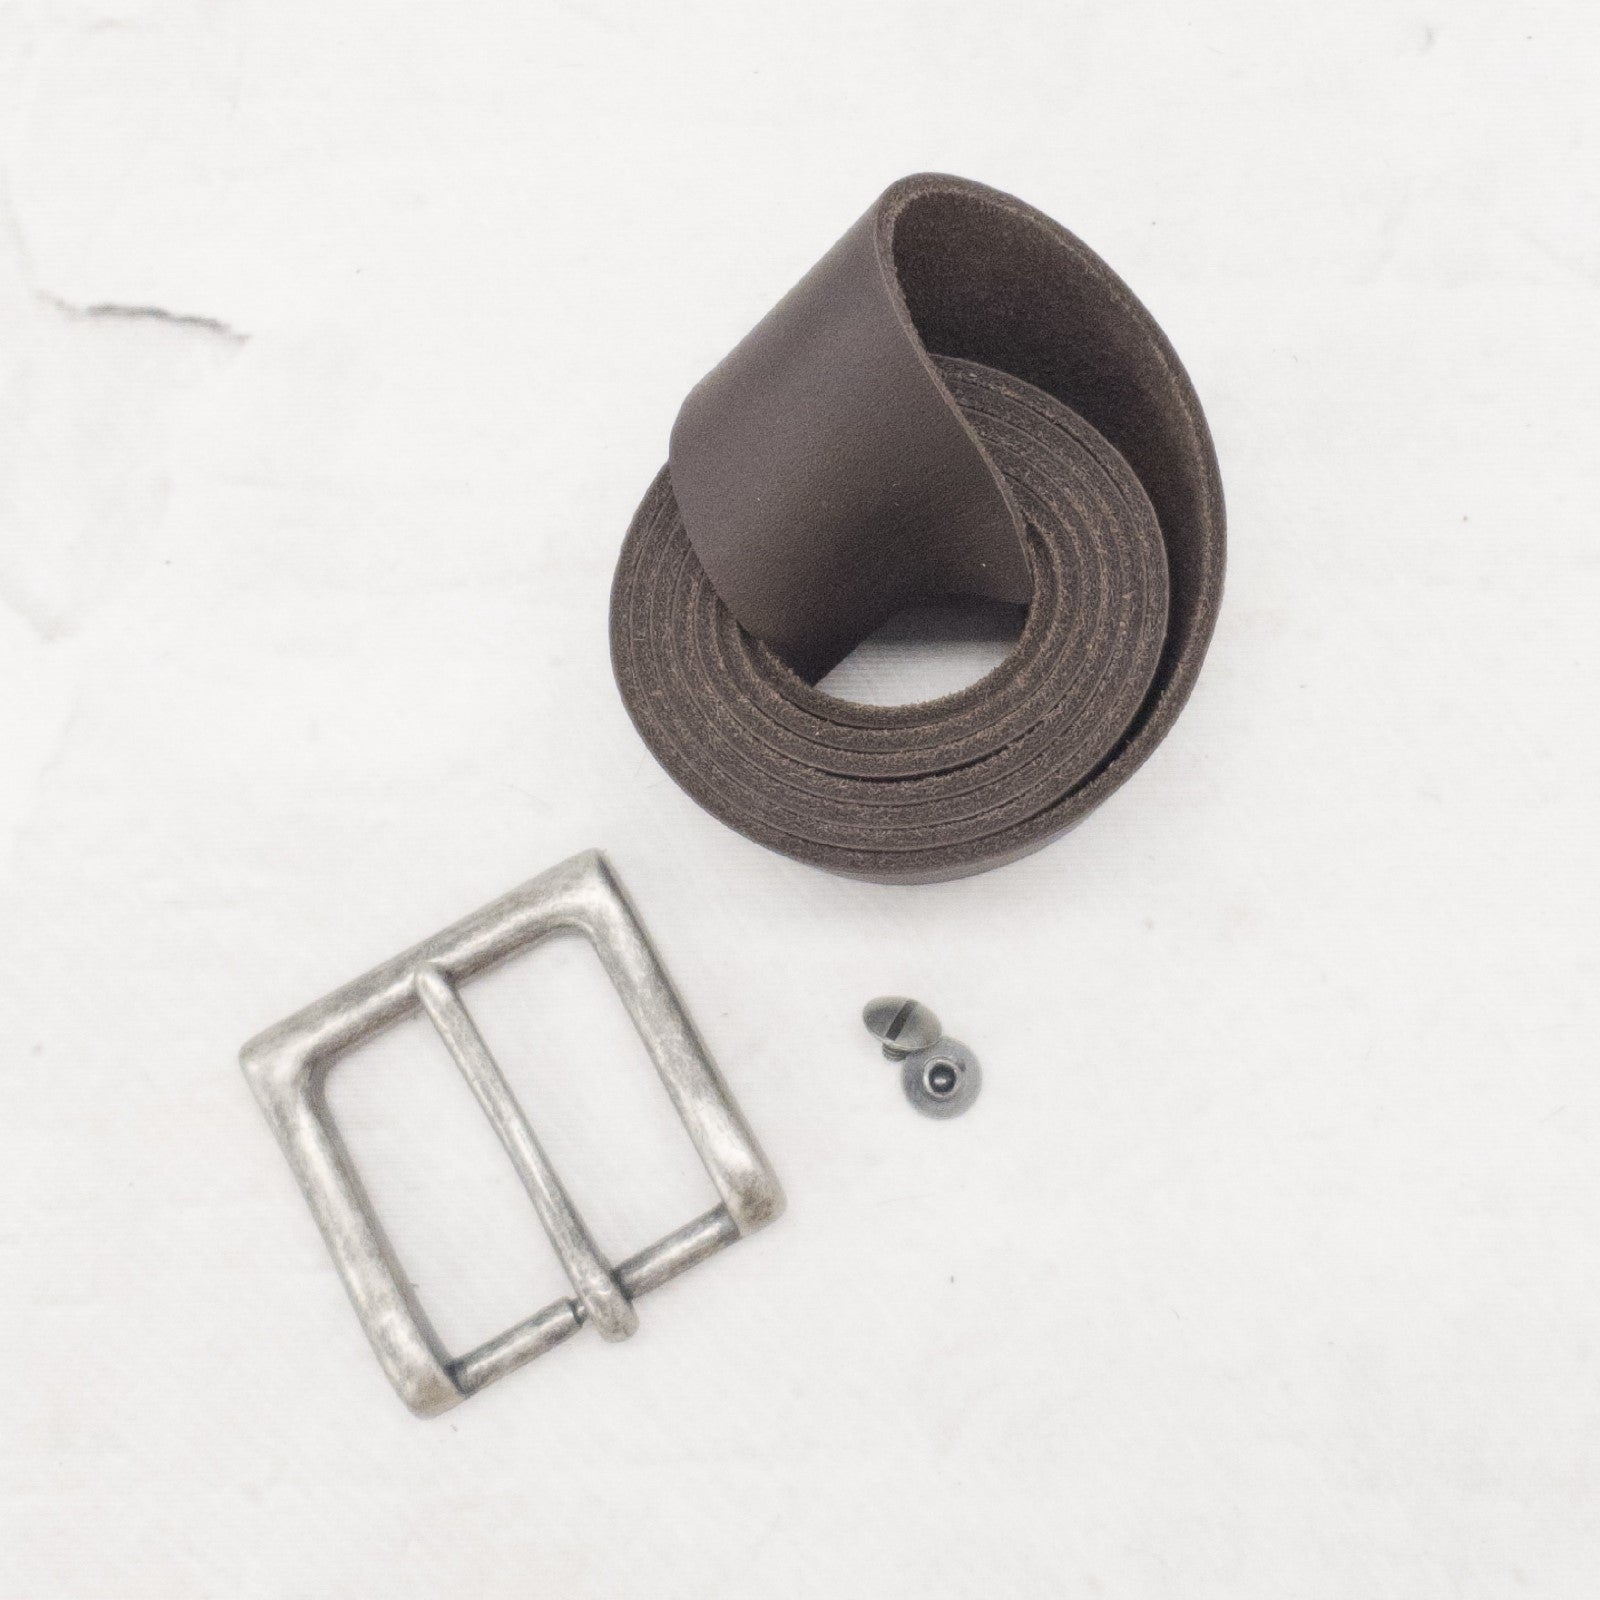 Belt Maker Kit, 8-9 oz, Dark Brown / Antique Nickel / Without | The Leather Guy